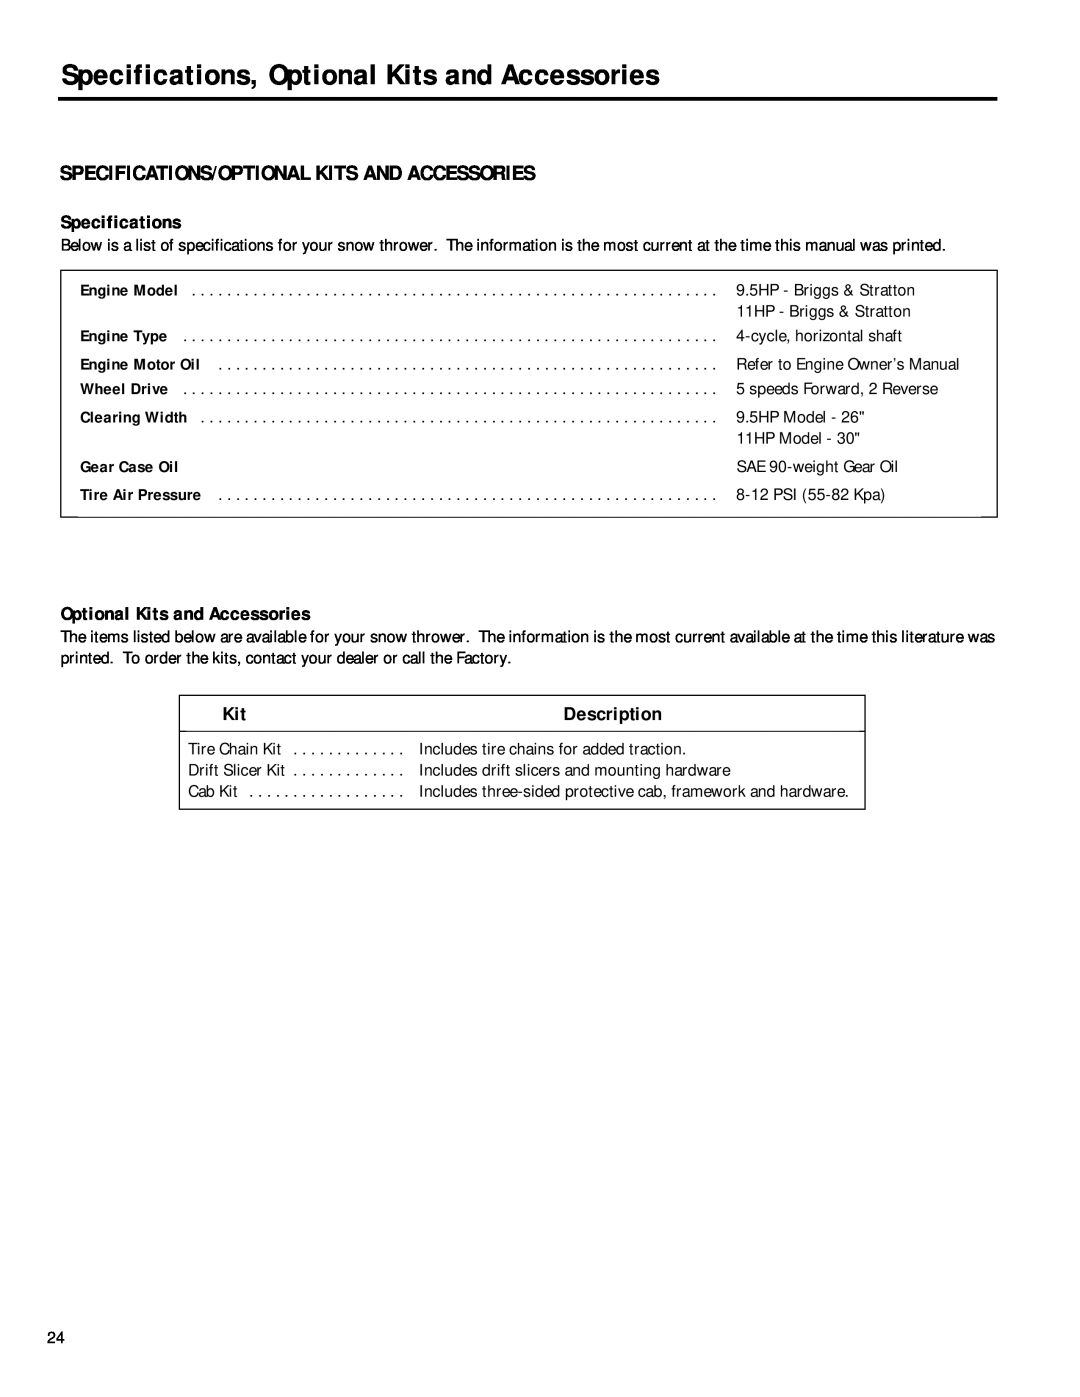 Troy-Bilt 42052 Specifications, Optional Kits and Accessories, Specifications/Optional Kits And Accessories, Description 